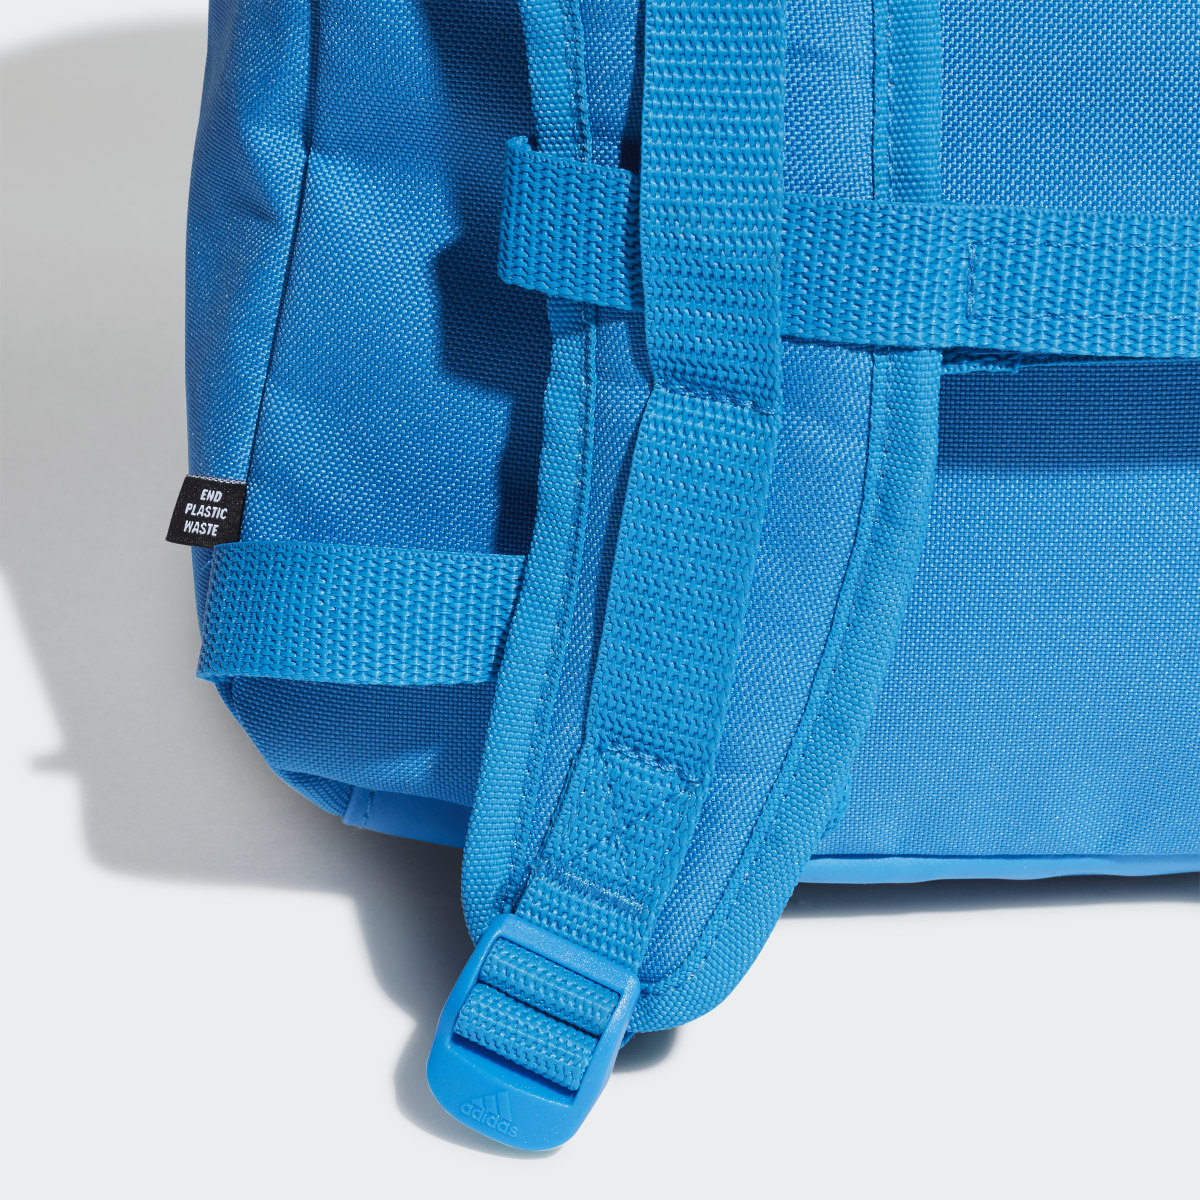 Adidas Backpack. 6